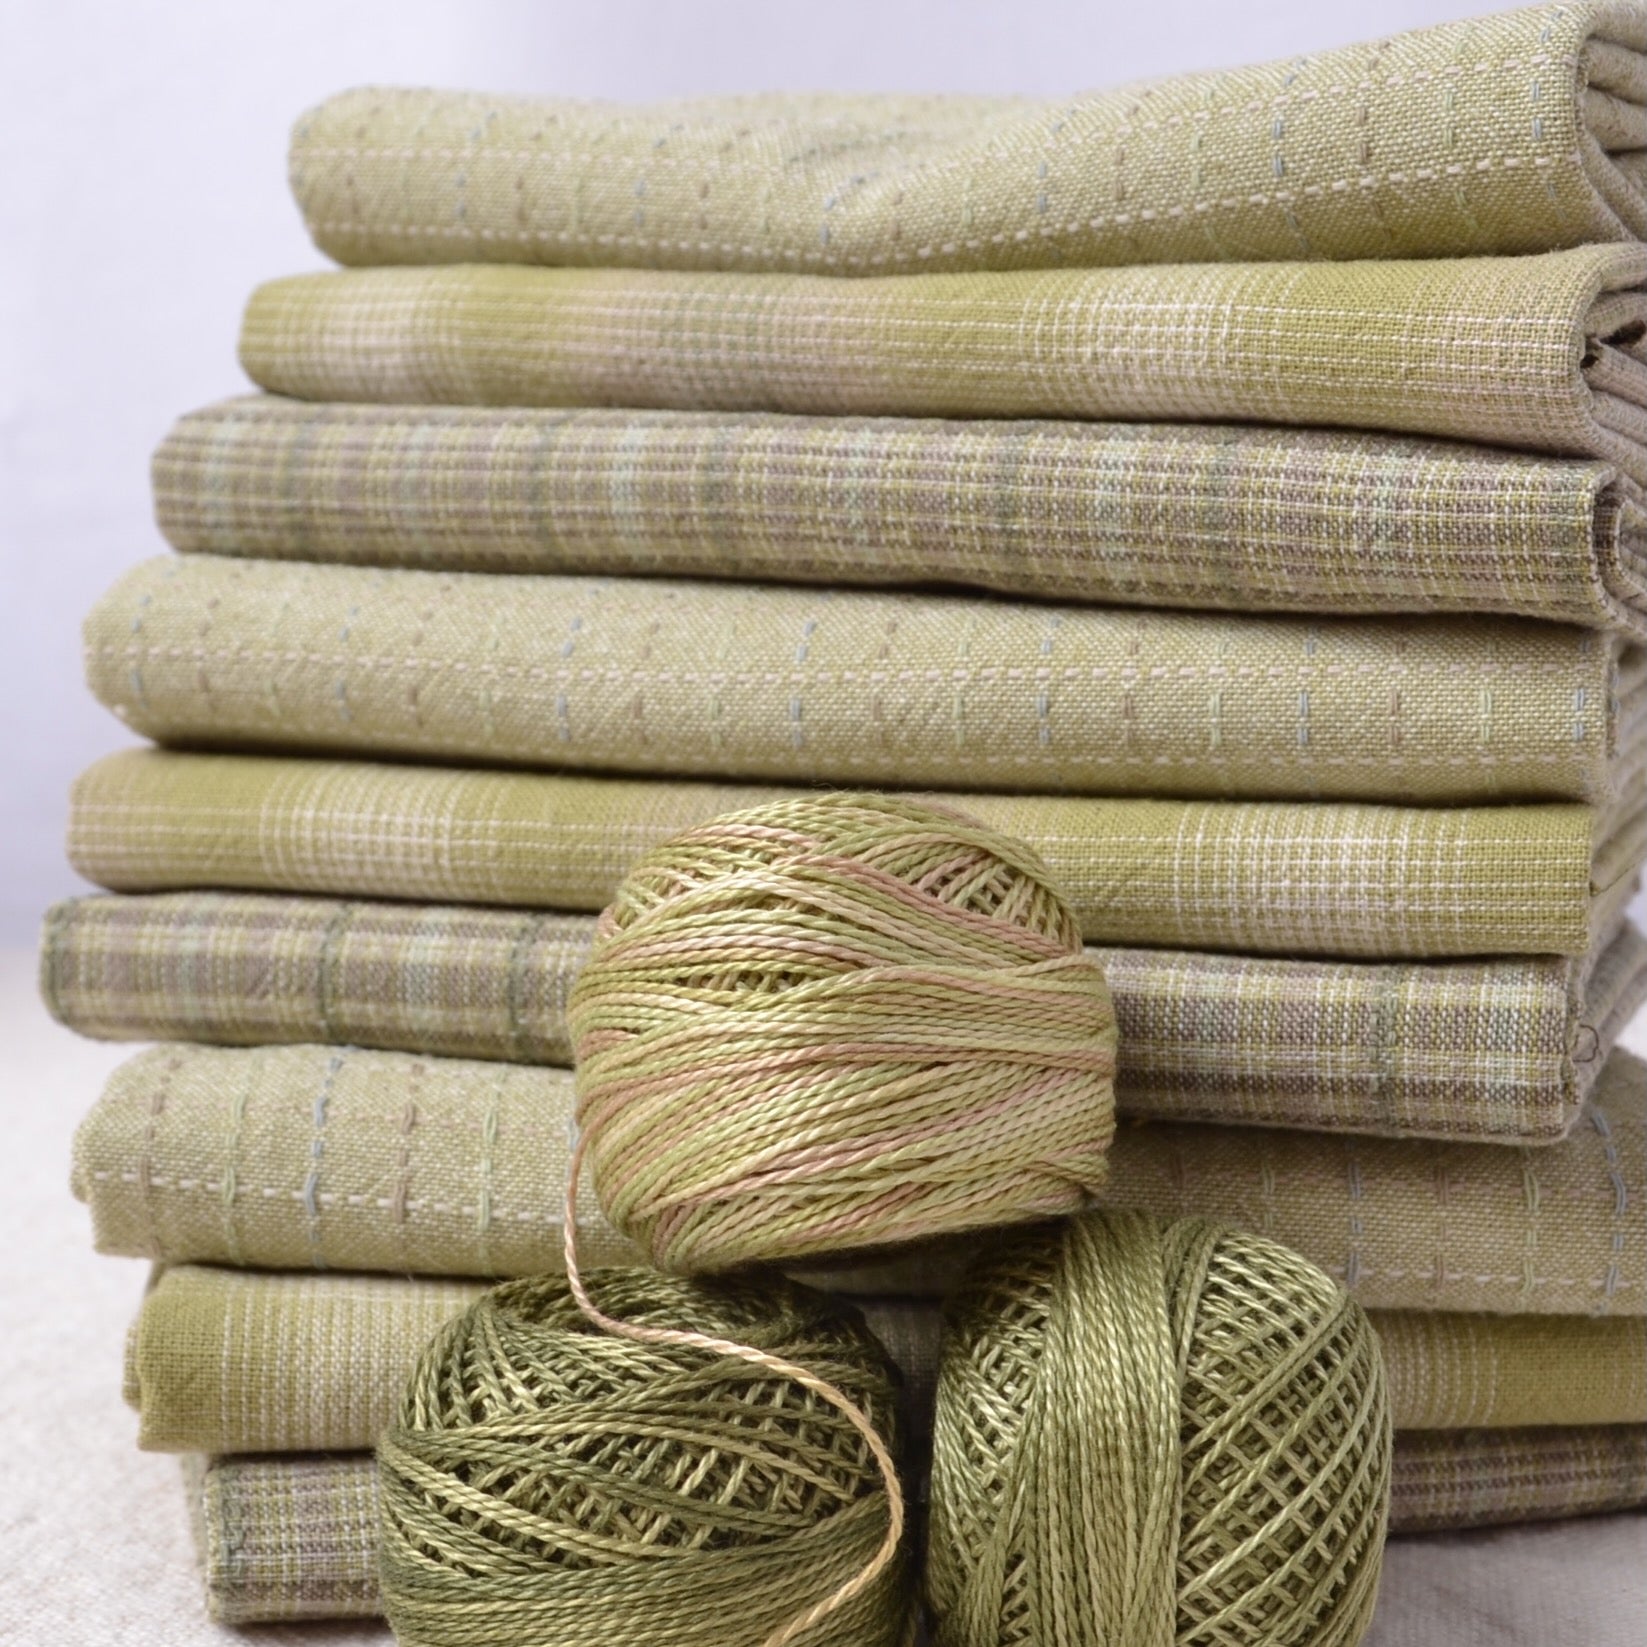 green dued yarn cotton fabric with valdani #8 perle cotton yarn